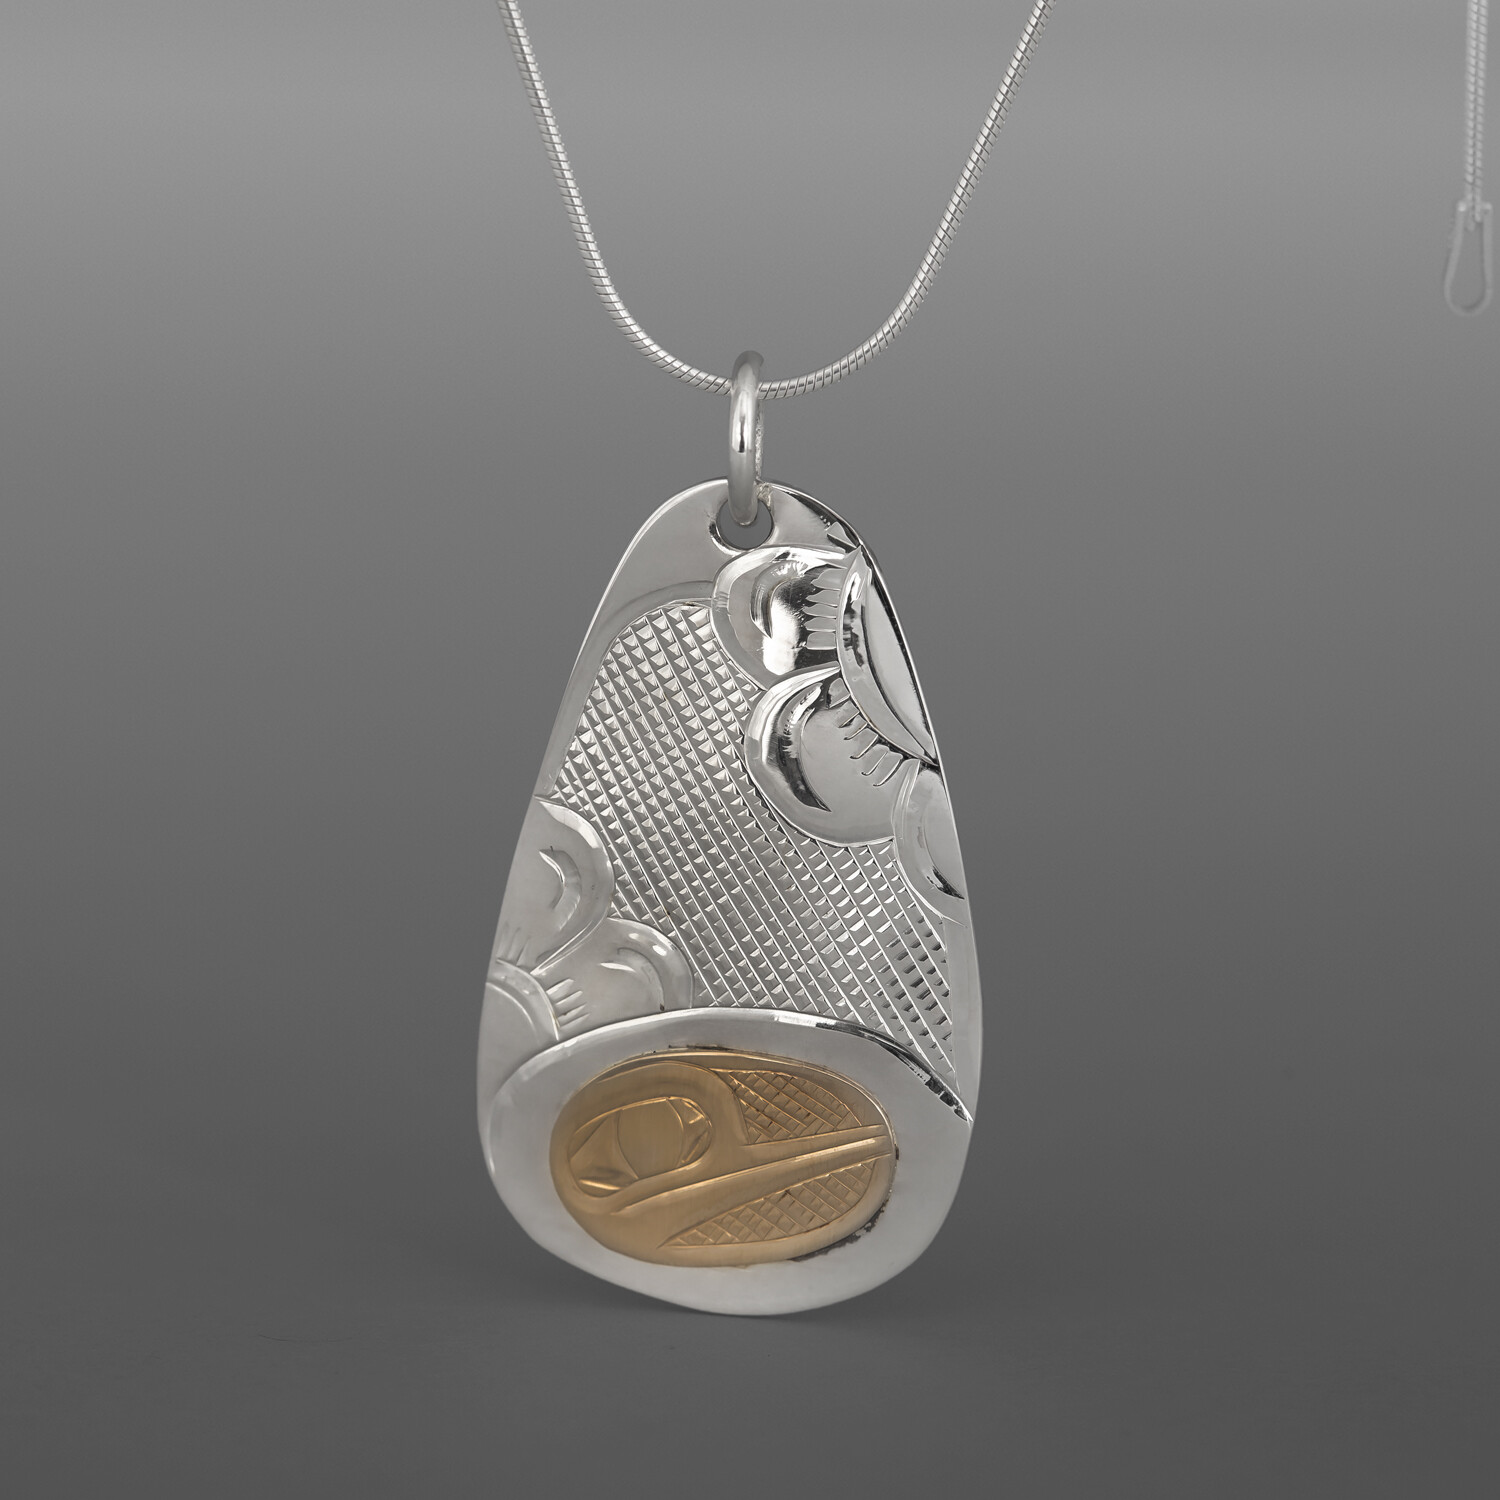 Hummingbird Teardrop Pendant
Corrine Hunt
Kwakwaka'wakw
Silver, 14k gold
1½” x ¾”
$350